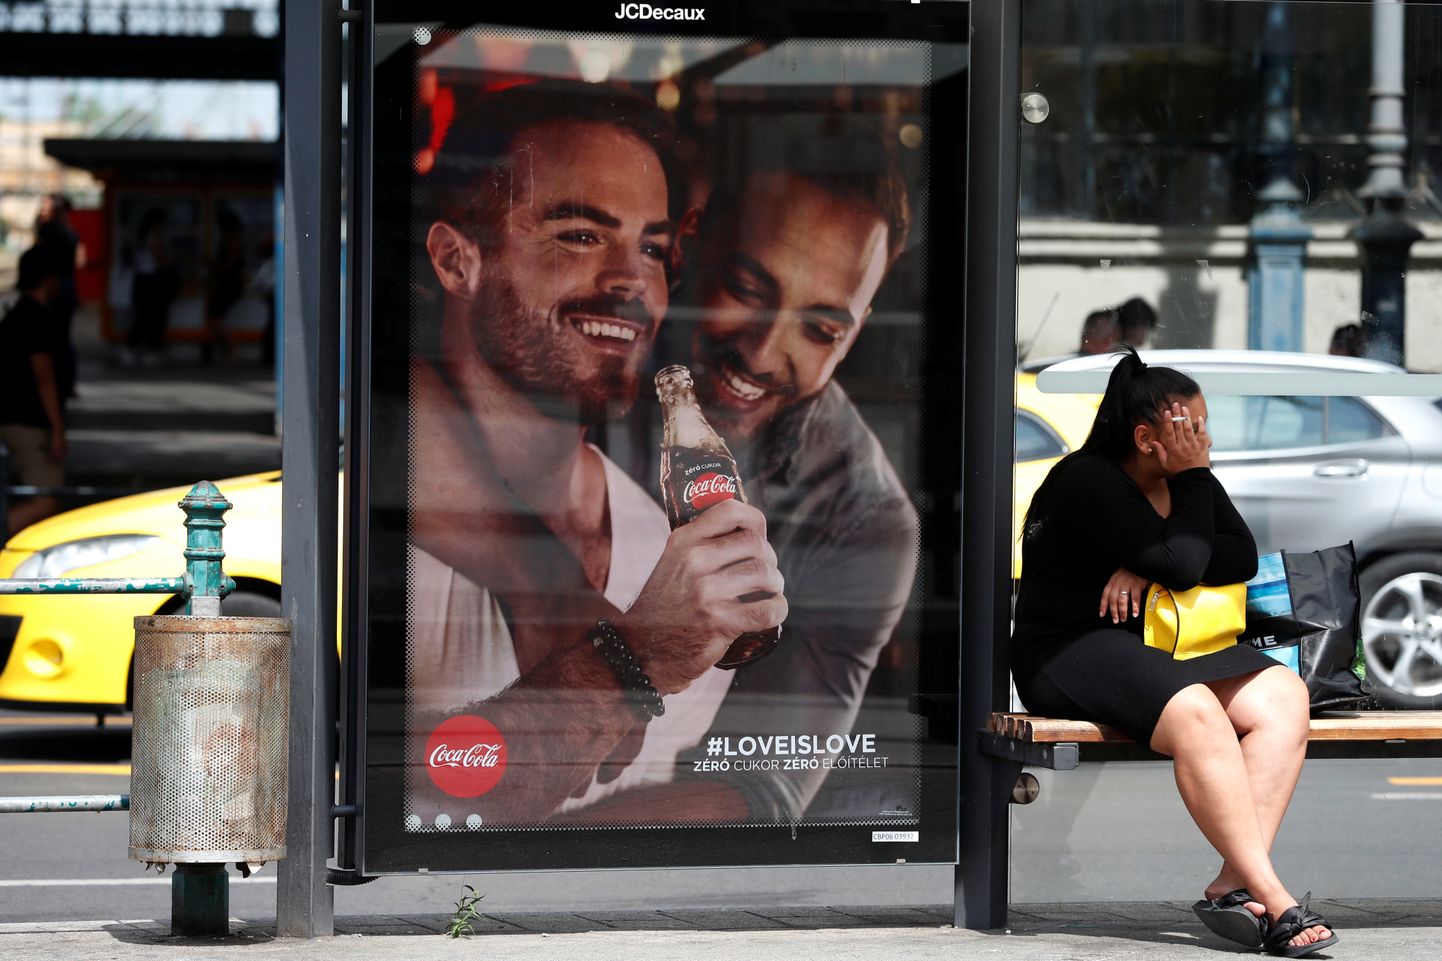 Vastuoluline Coca-Cola reklaam Budapestis.